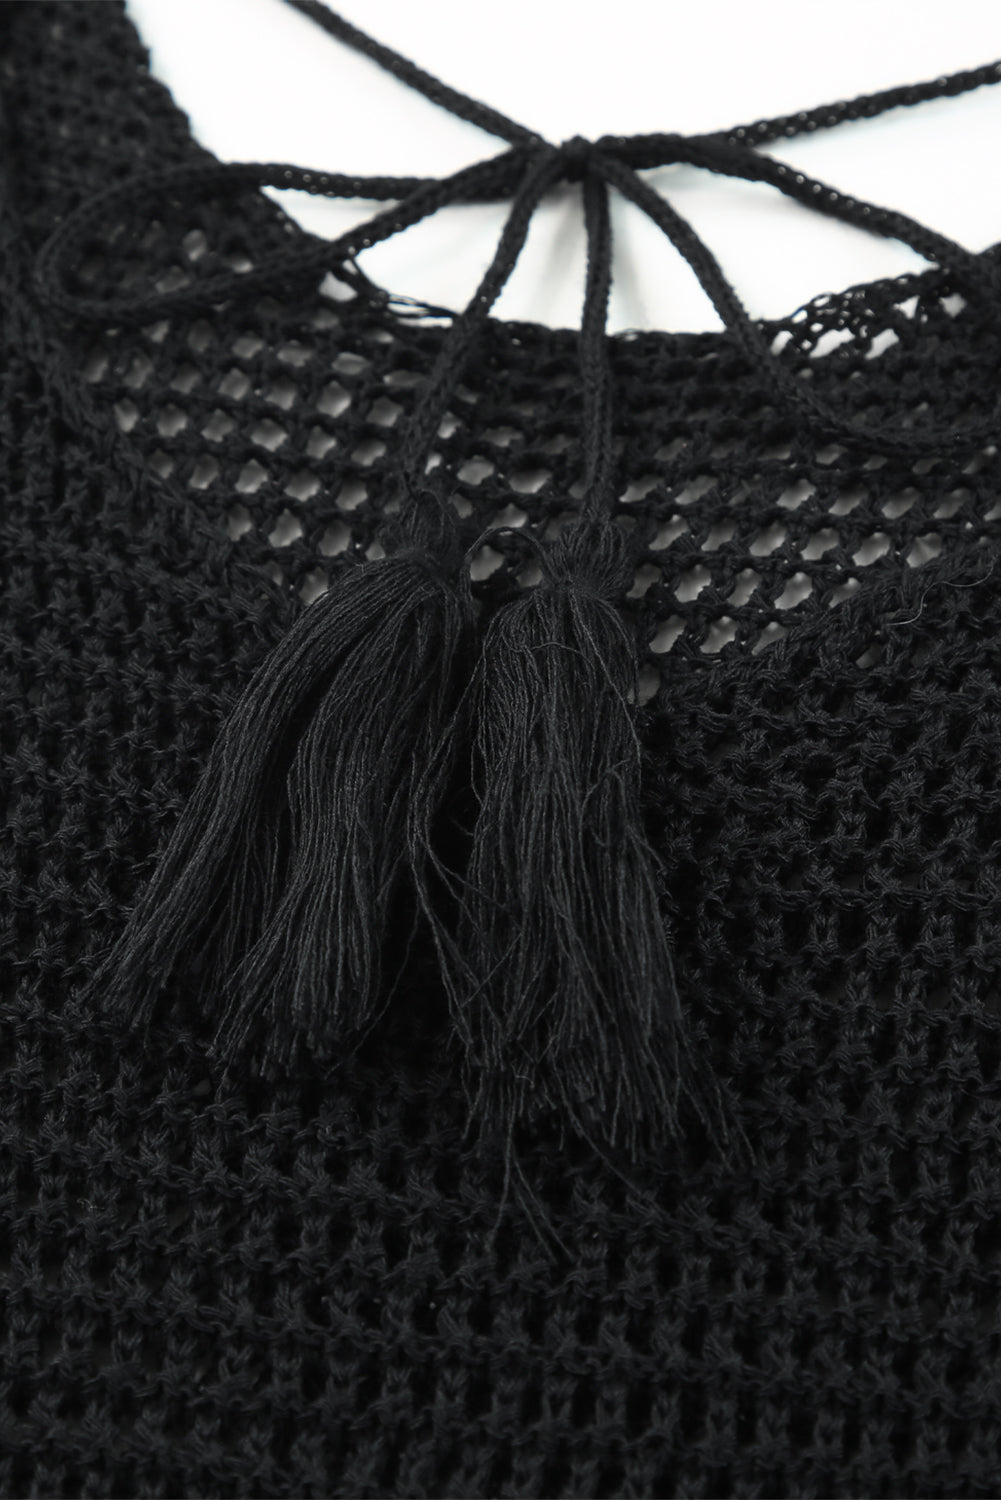 Black Boho Floral Crochet Sleeveless Beach Cover Up Dress